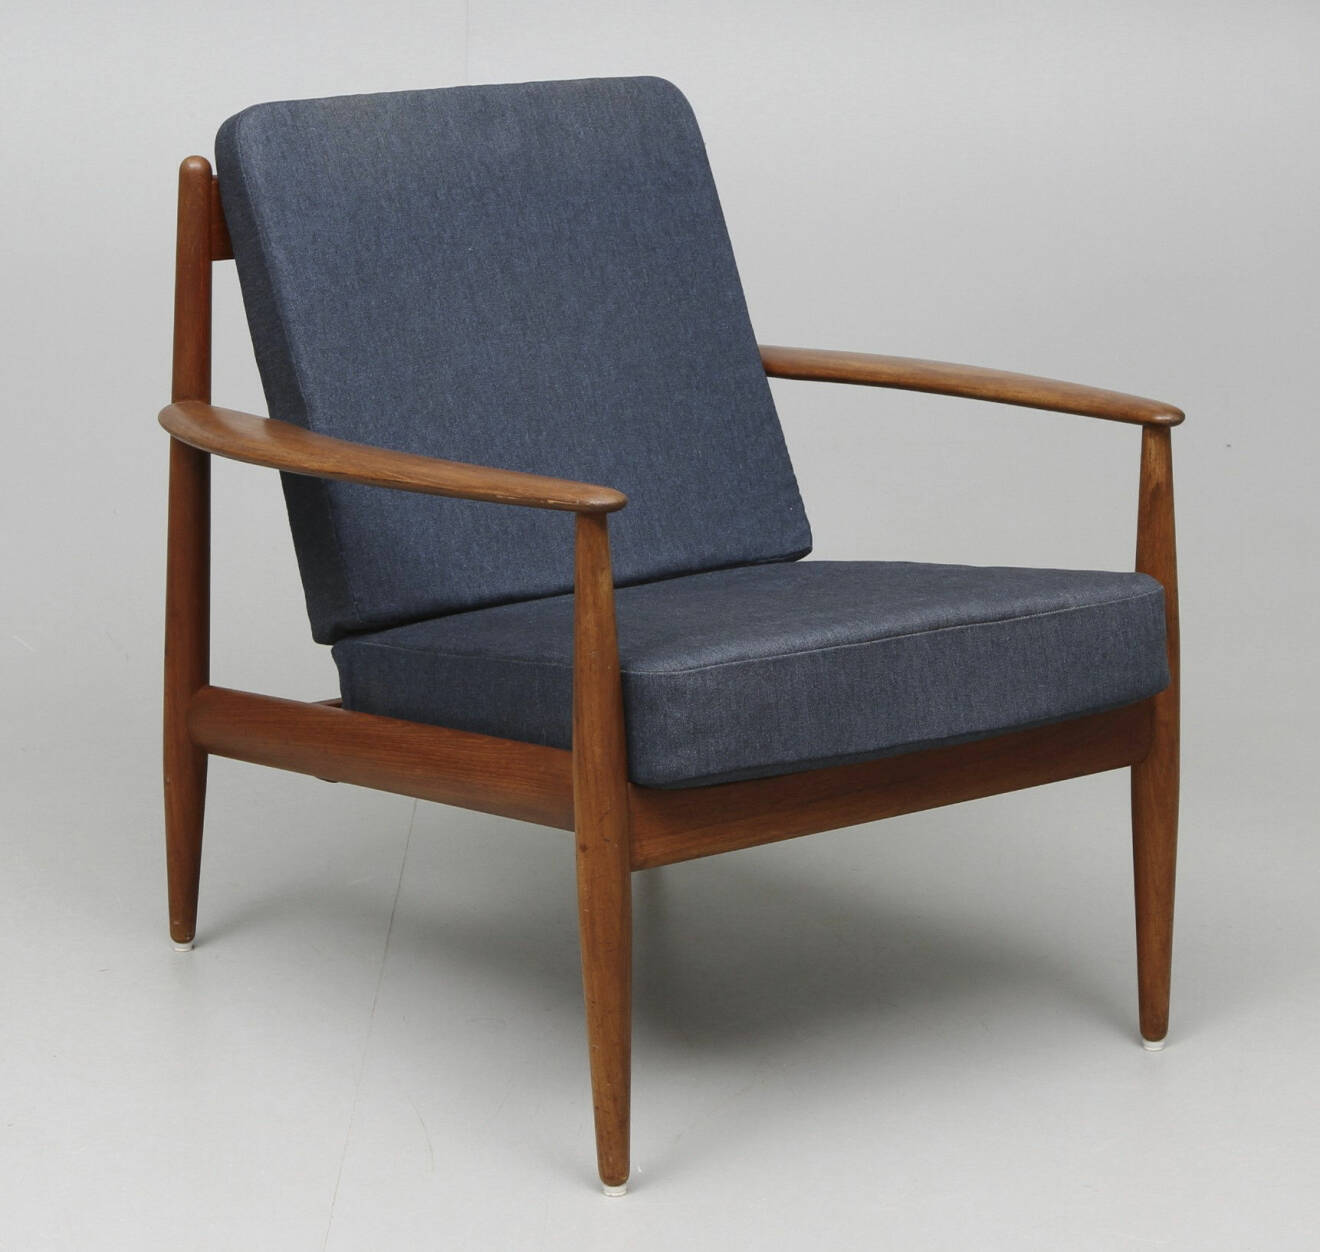 60-talsstol av Grete Jalk, tillverkad av France &amp; Søn.